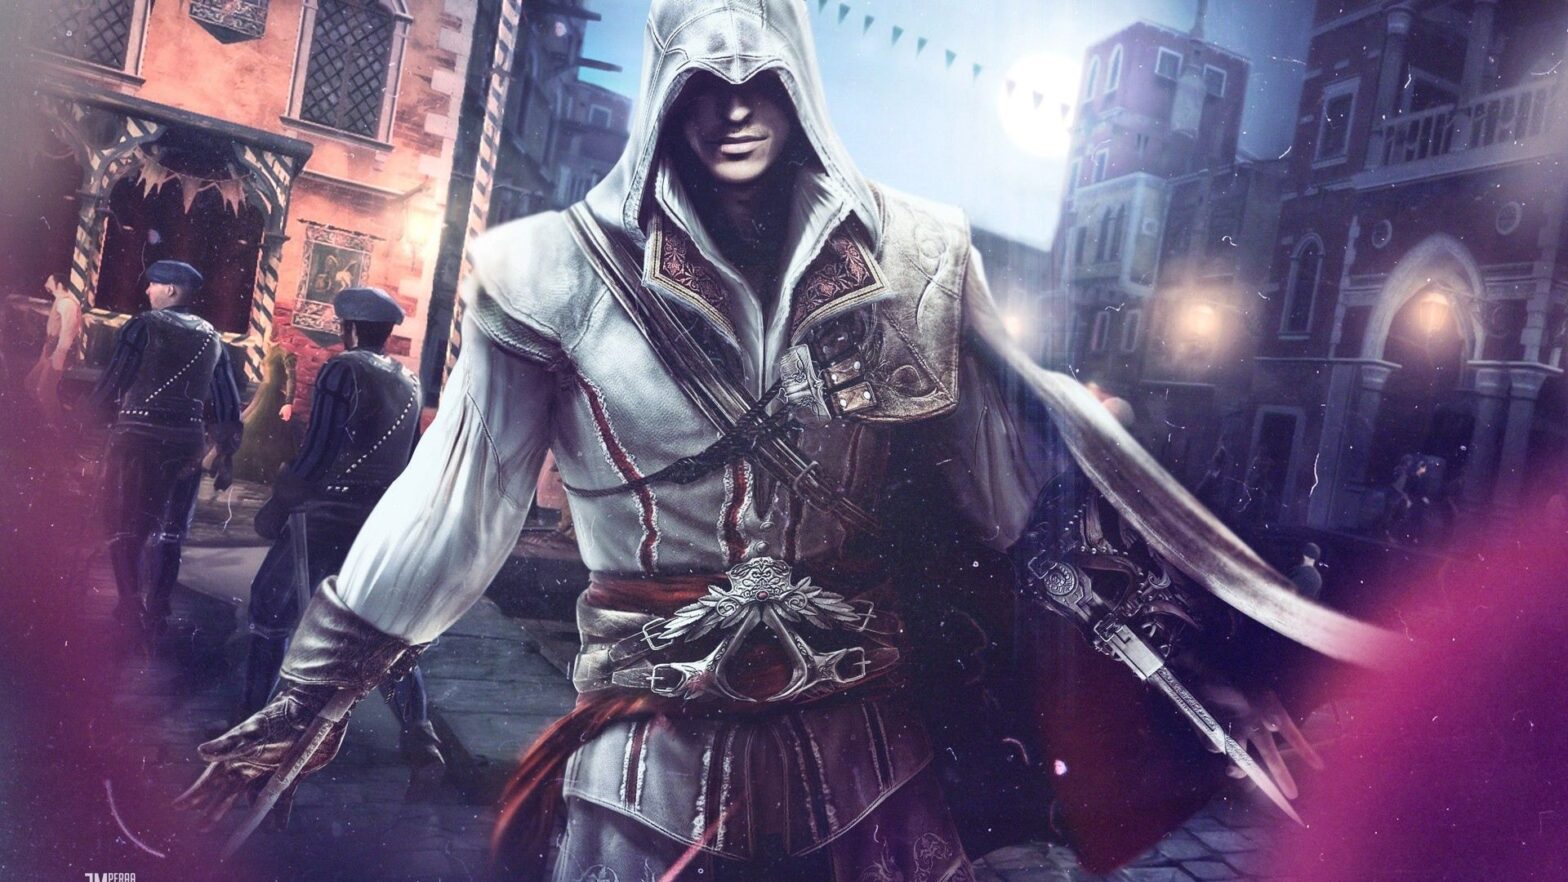 Asssassin's Creed II fanart featuring Ezio